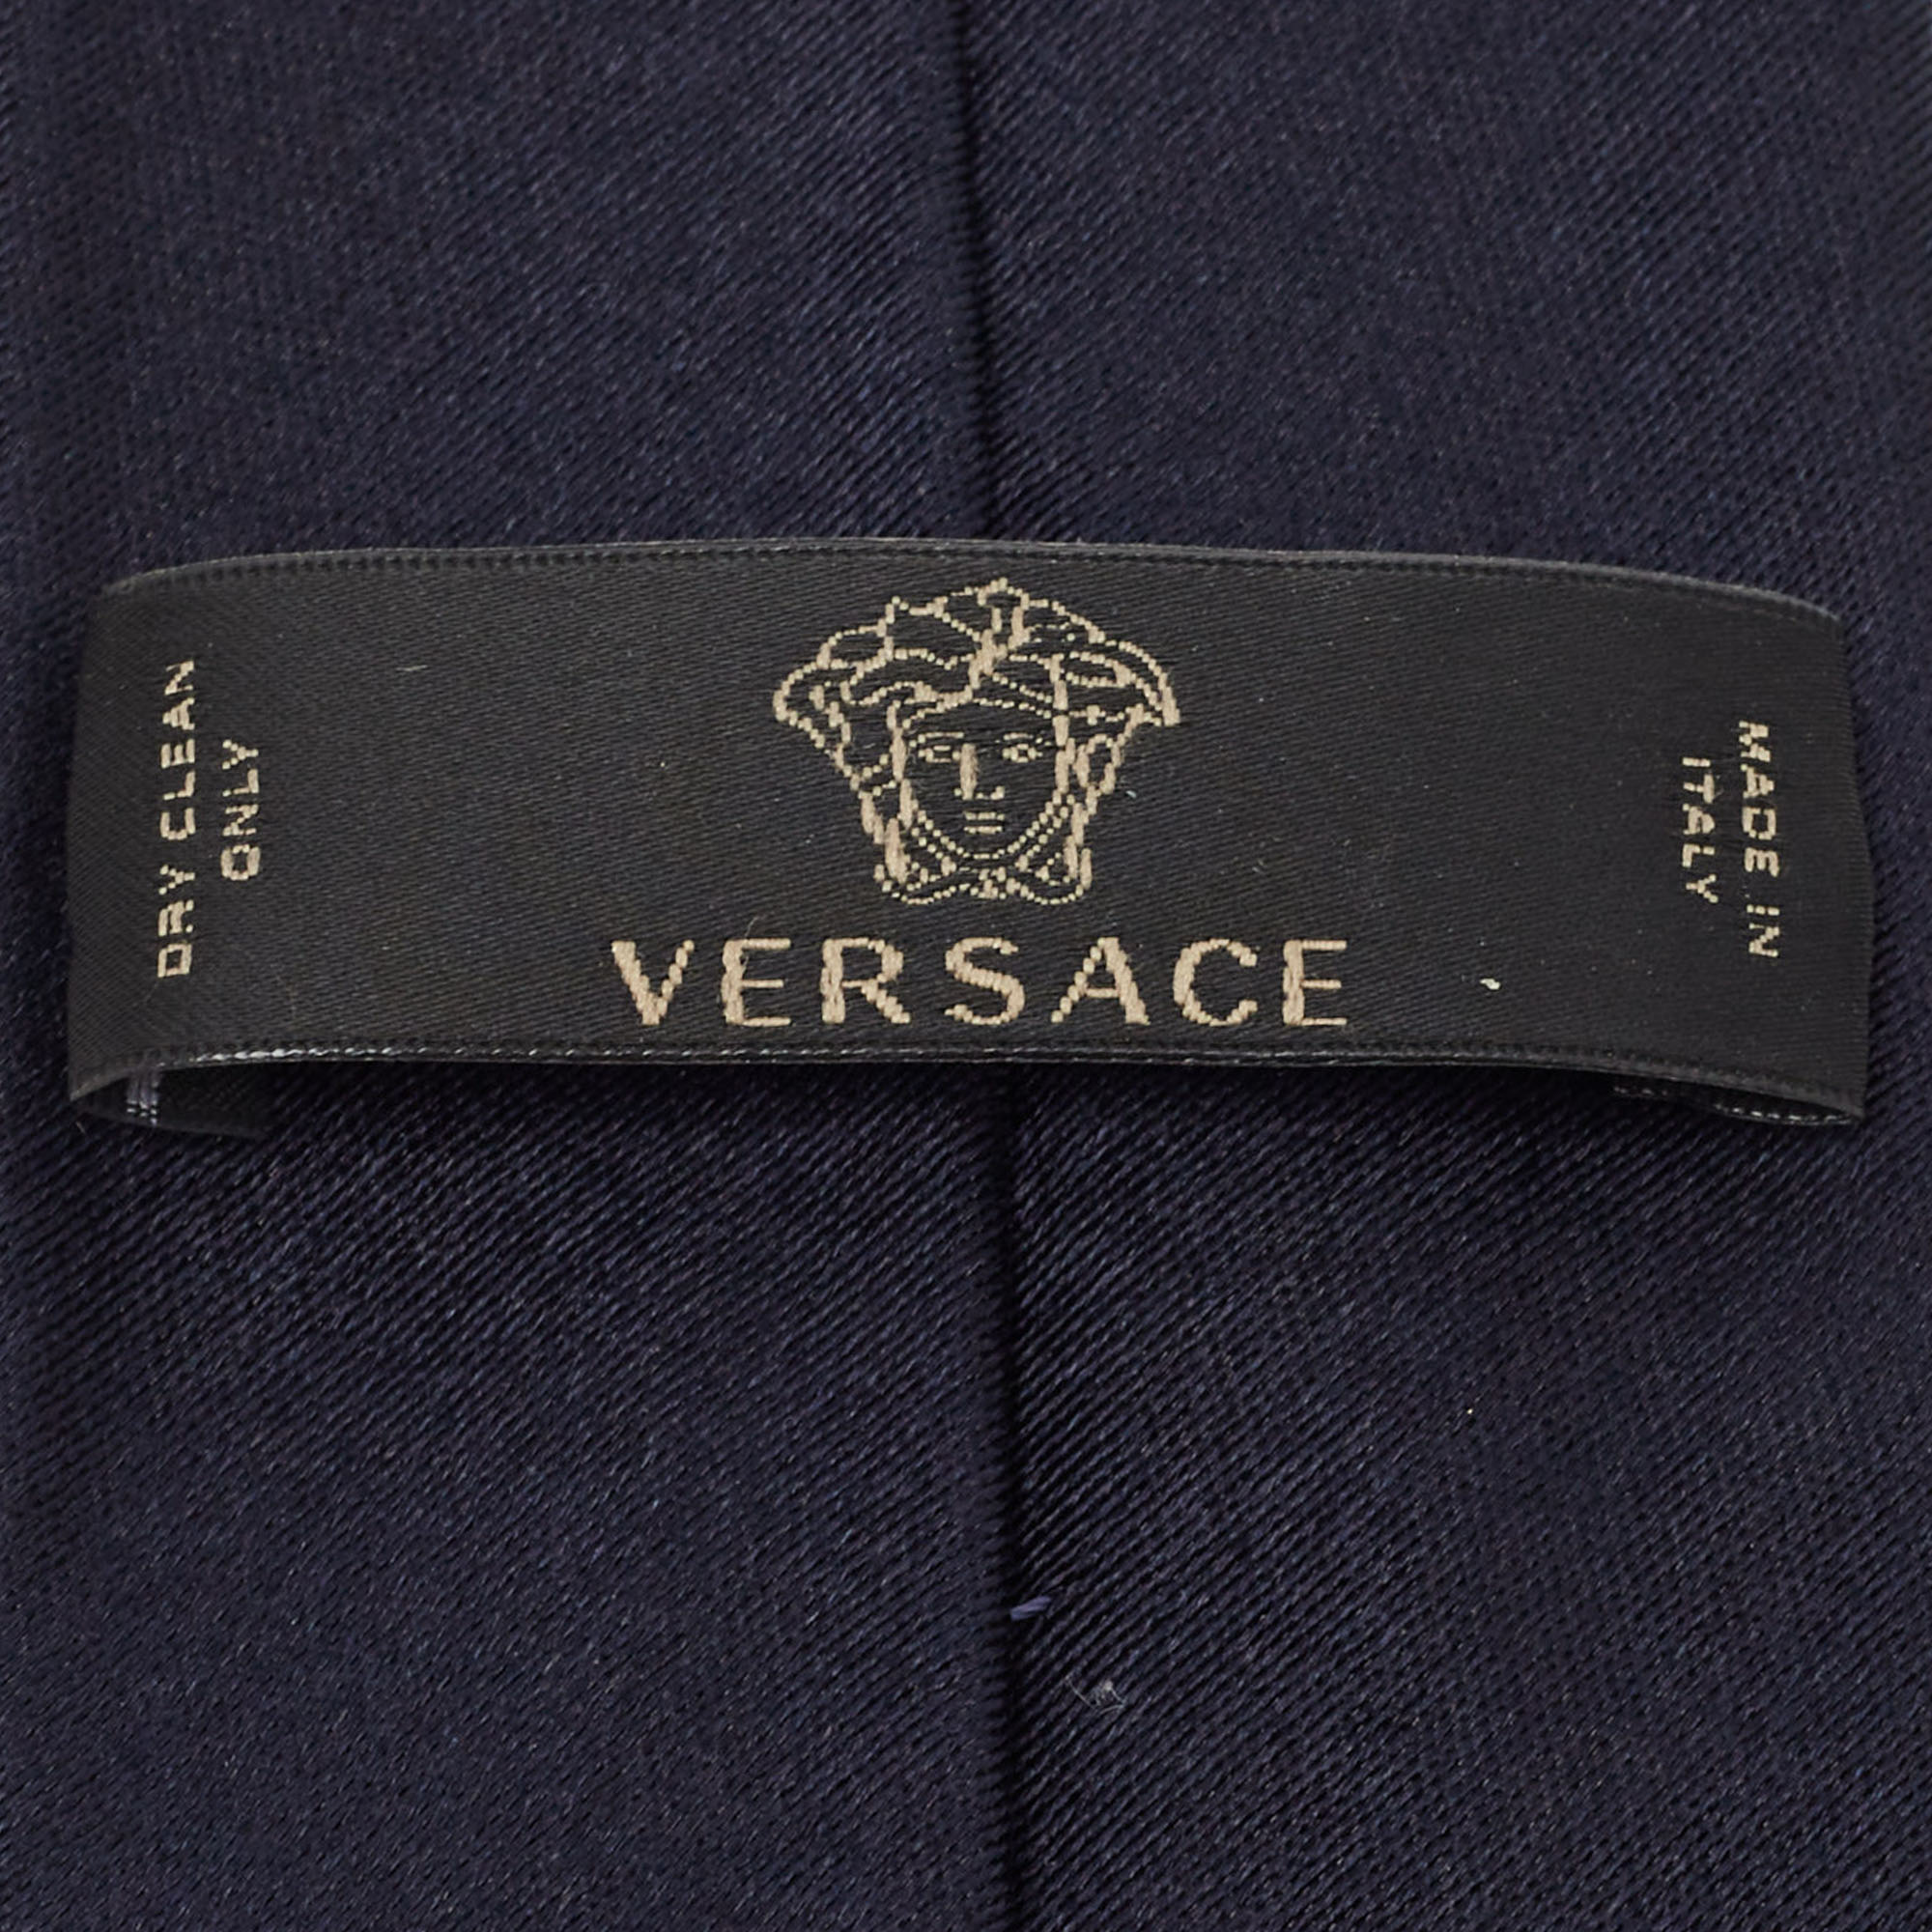 Versace Navy Blue Medusa Patterned Silk Tie